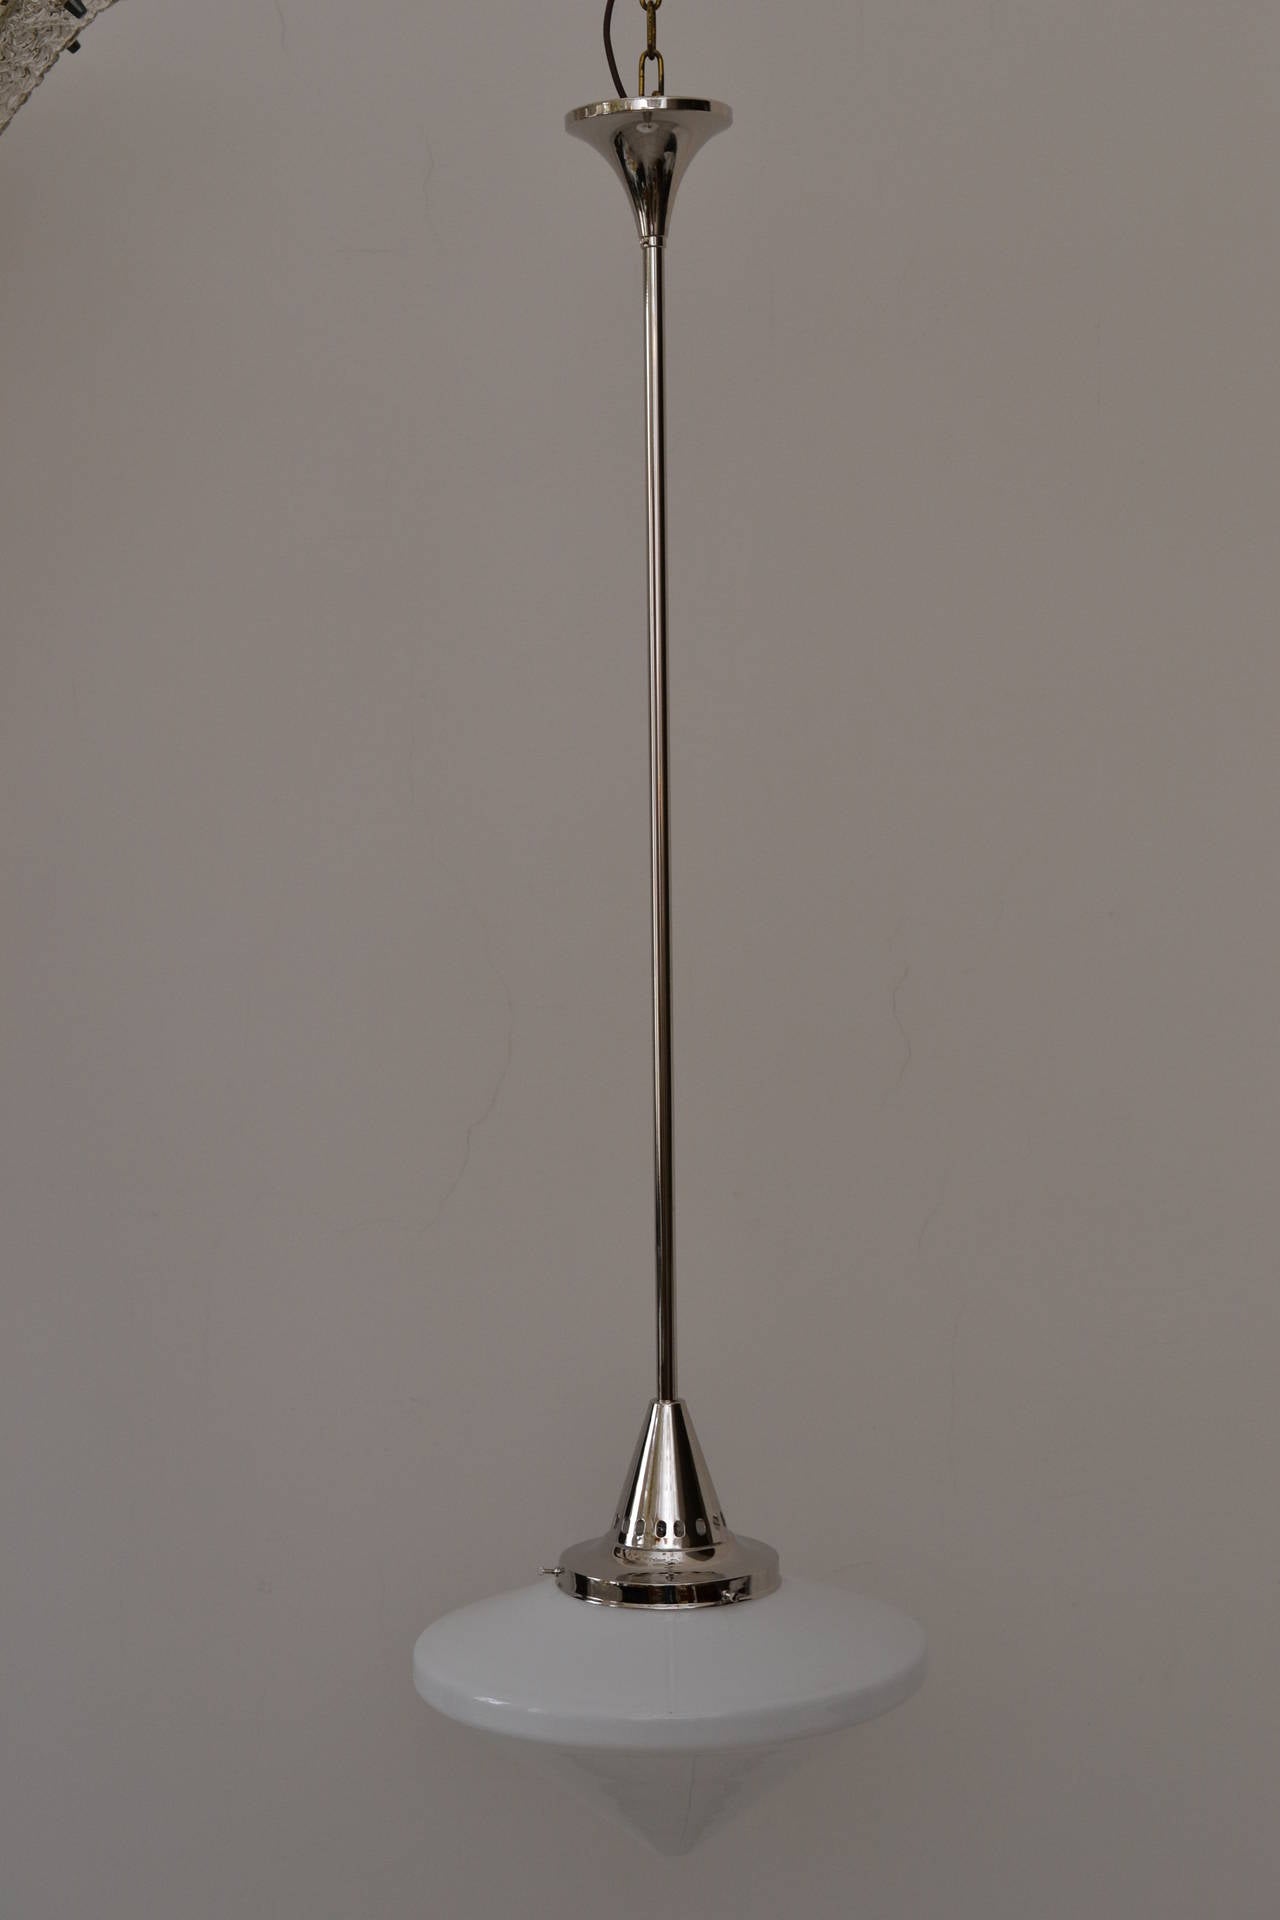 brass nickel-platend chandelier with Opal glass
Original condition